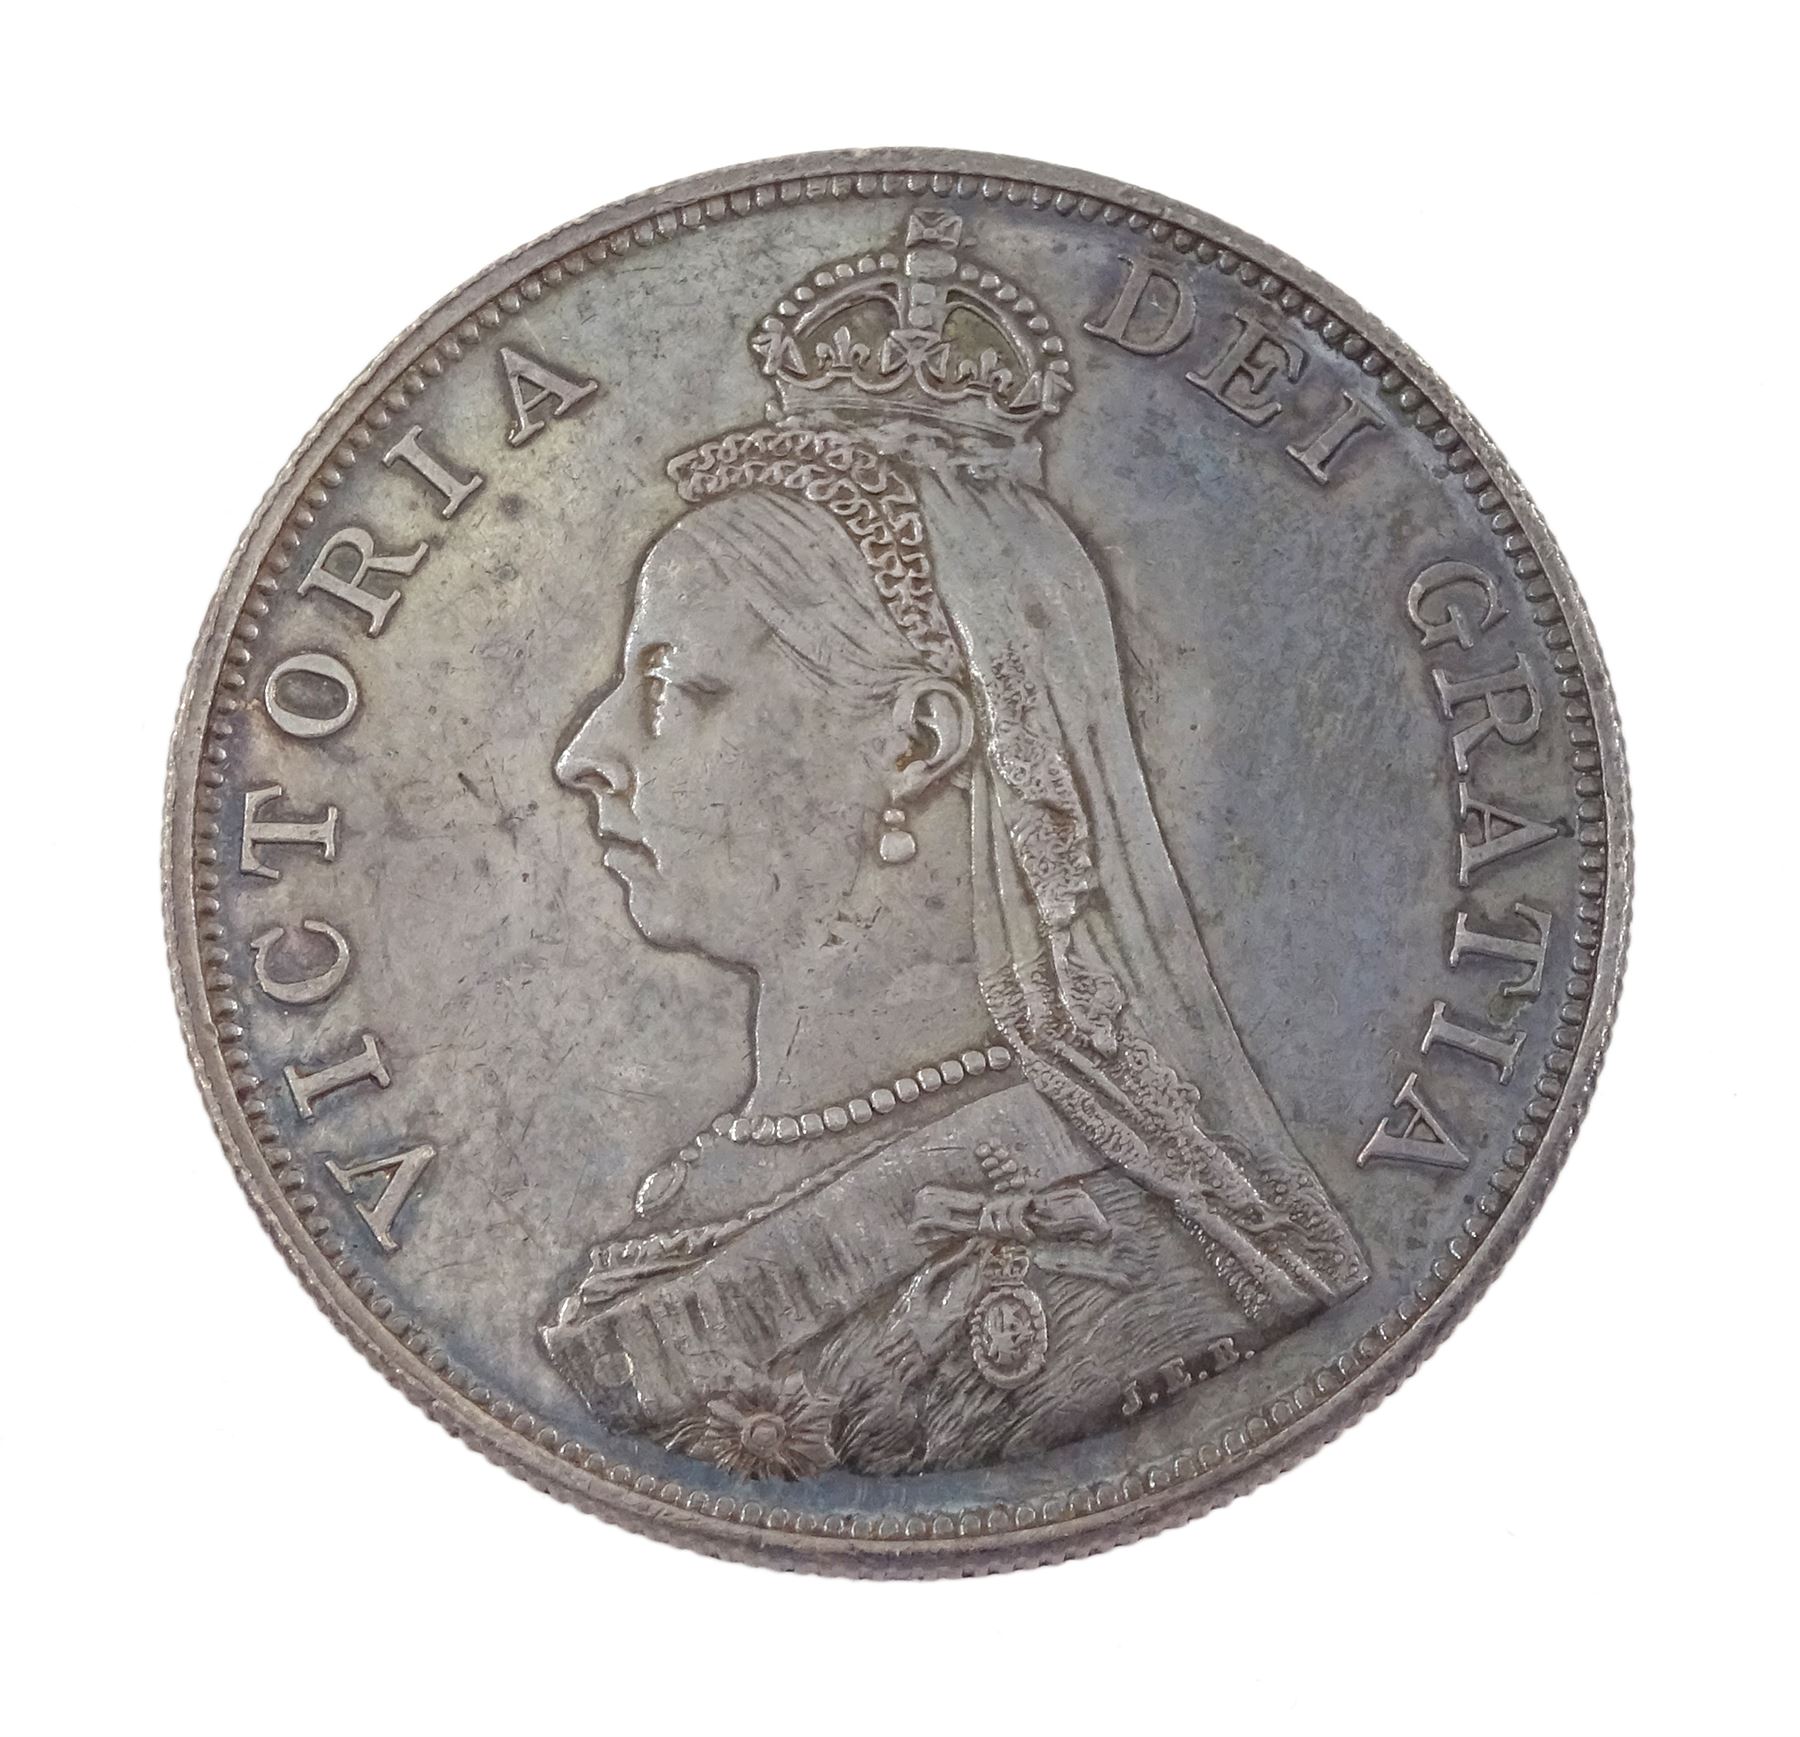 Queen Victoria 1887 specimen coin set - Image 17 of 27